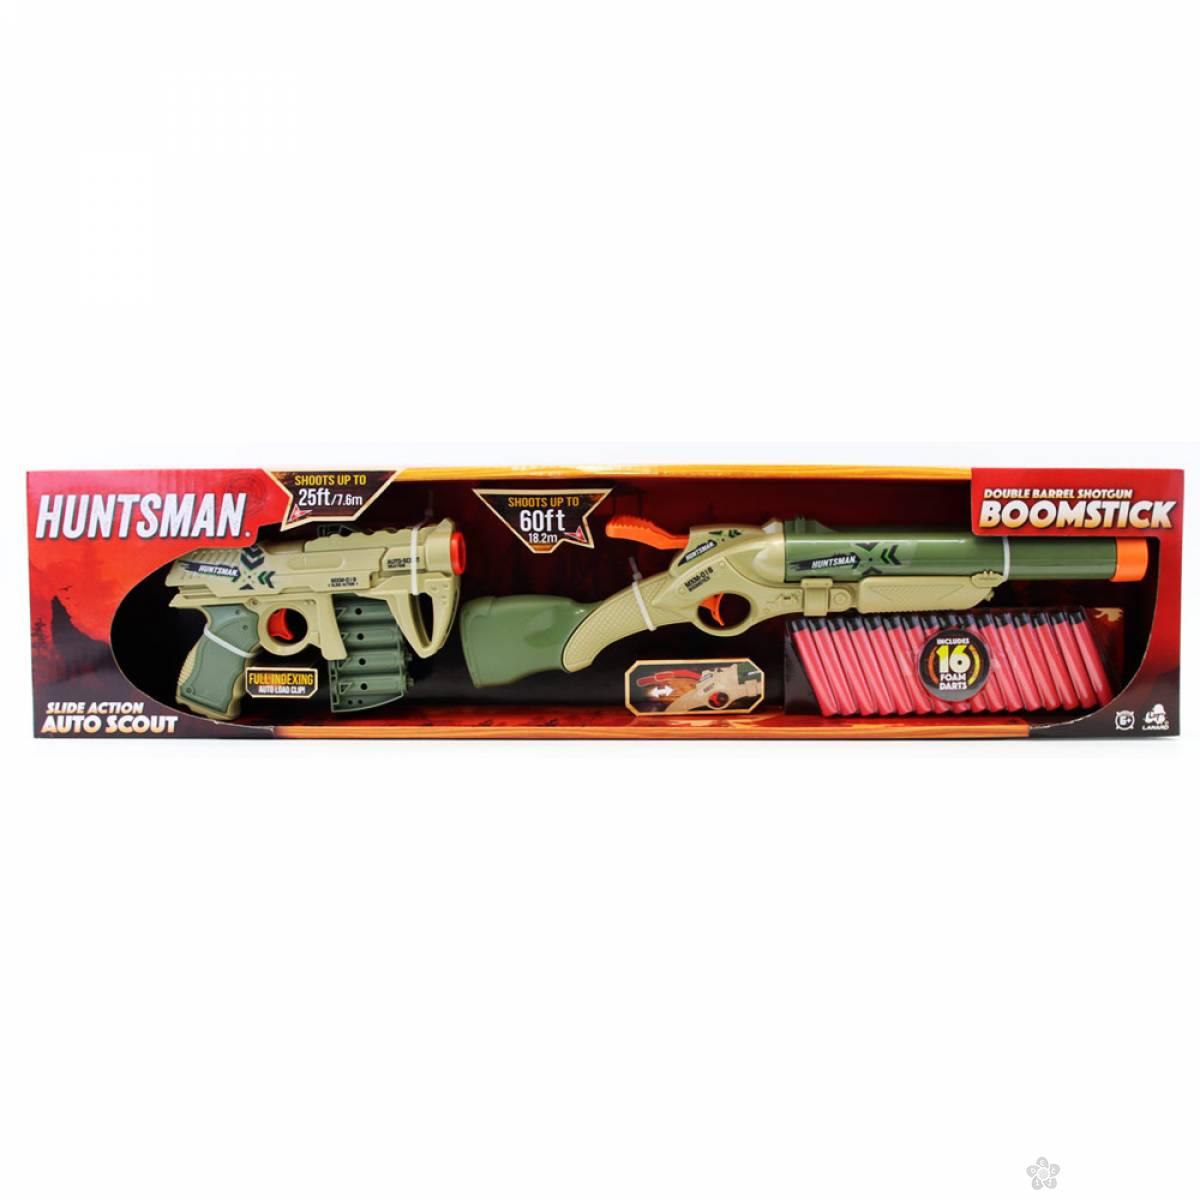 Lanard Set puška i pištolj Huntsman 50 91919 